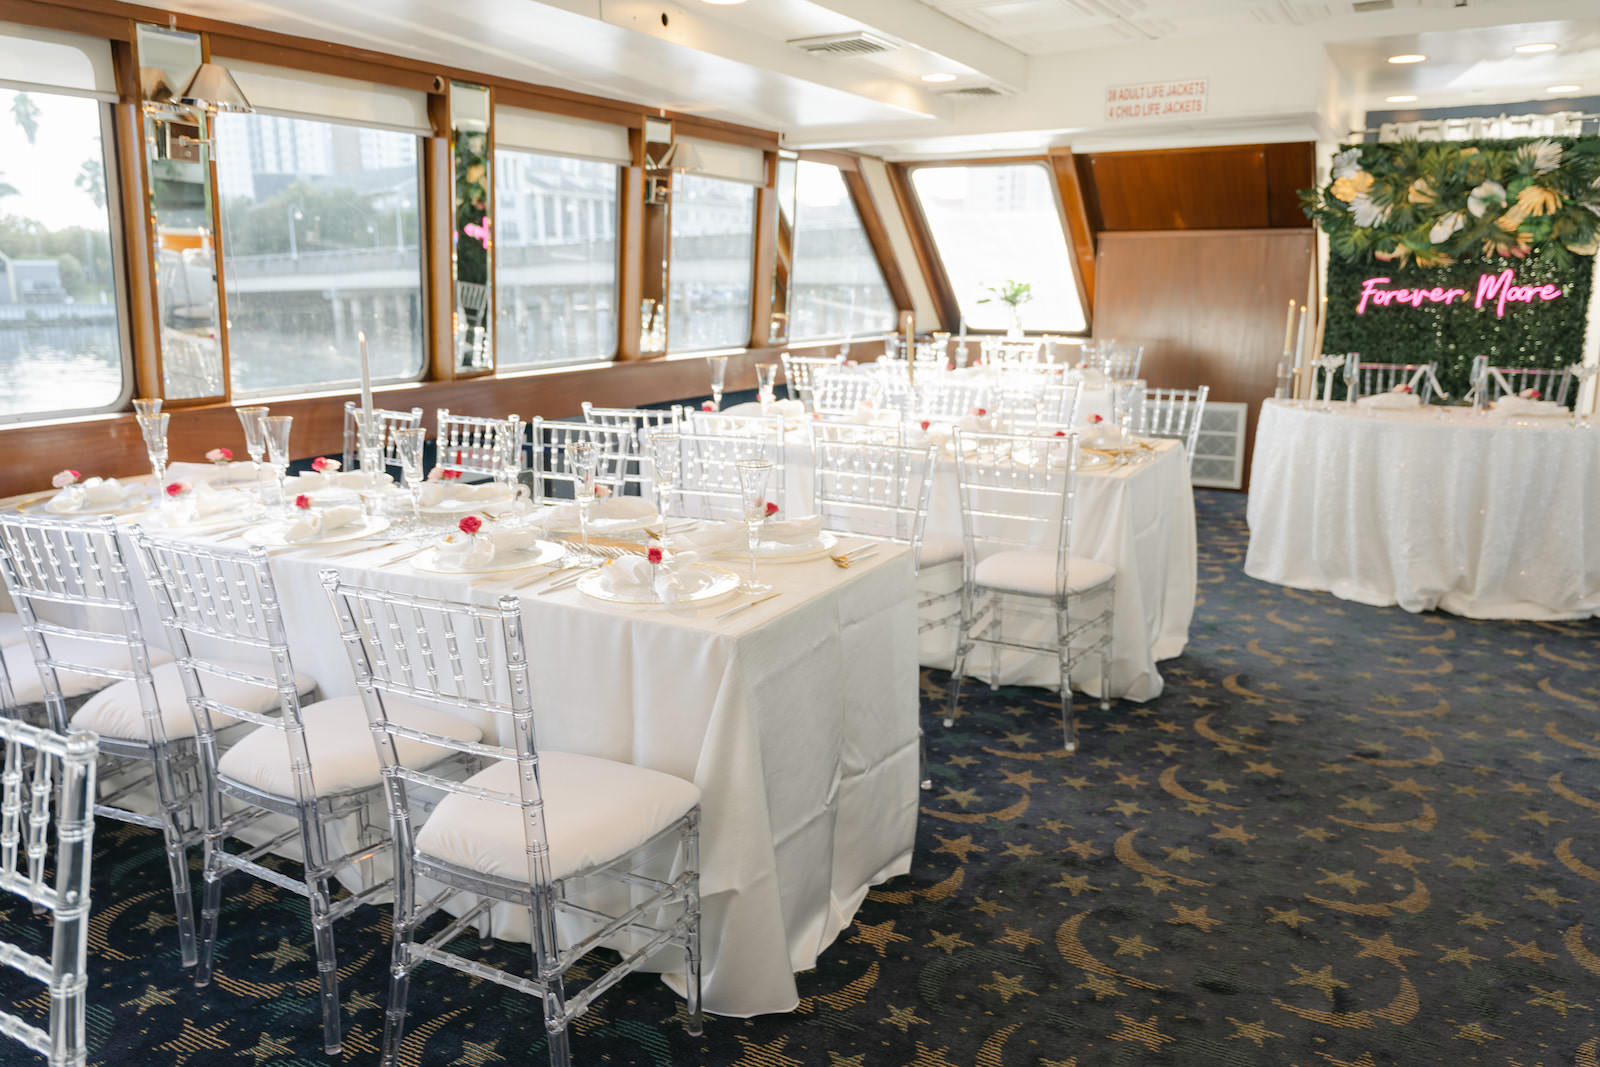 Tropical Modern Wedding Reception Decor, Long Tables with White Linens, Acrylic Chiavari Chairs | Tampa Bay Wedding Rentals Kate Ryan Event Rentals | Wedding Venue Yacht StarShip